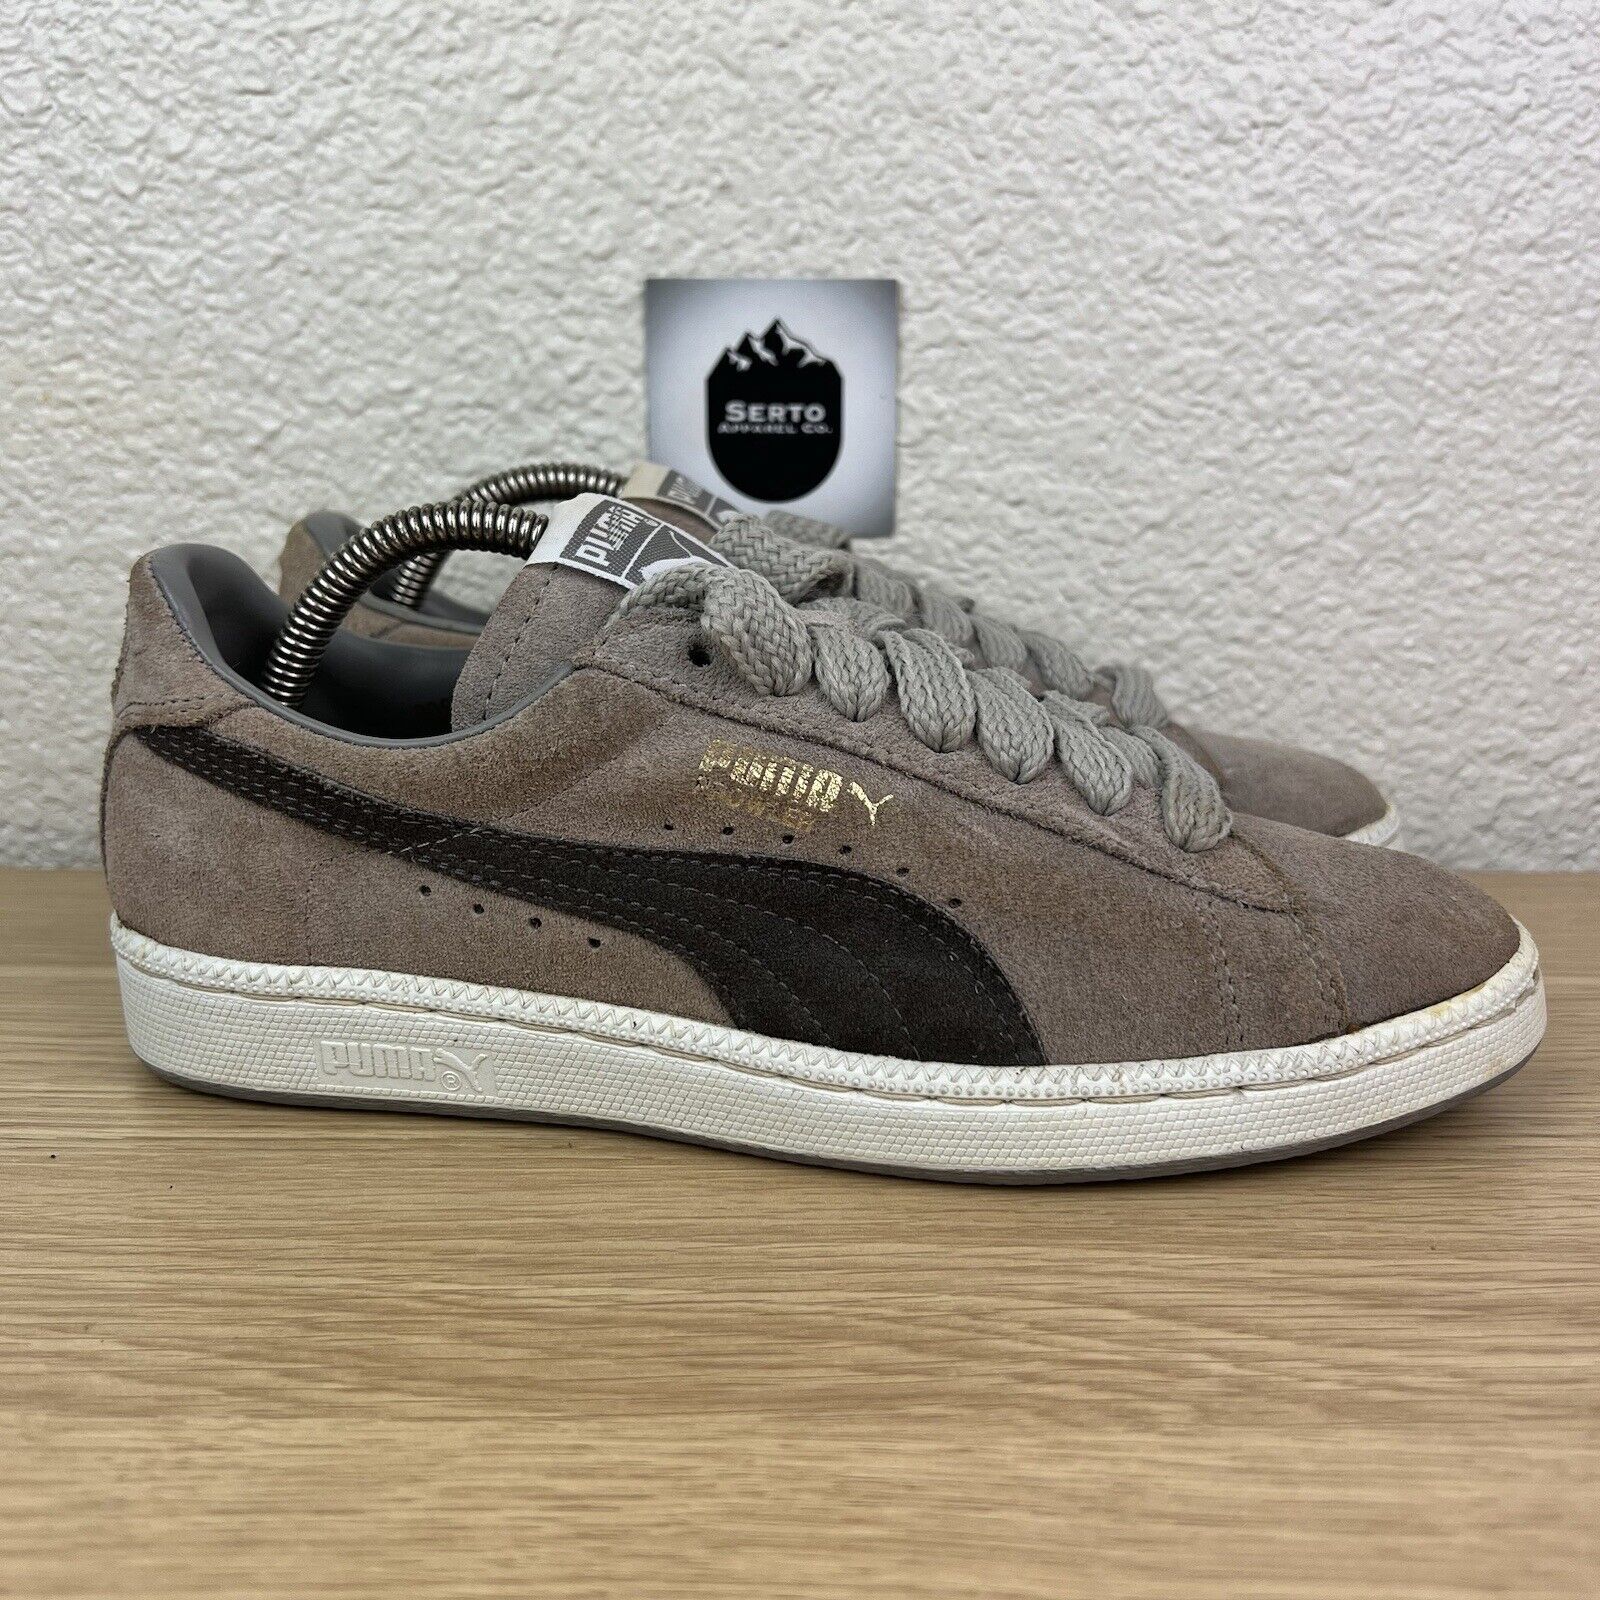 Vintage Puma Prowler Classic Macht\'s Mit Qualitat Sneakers Grey Suede Sz 6